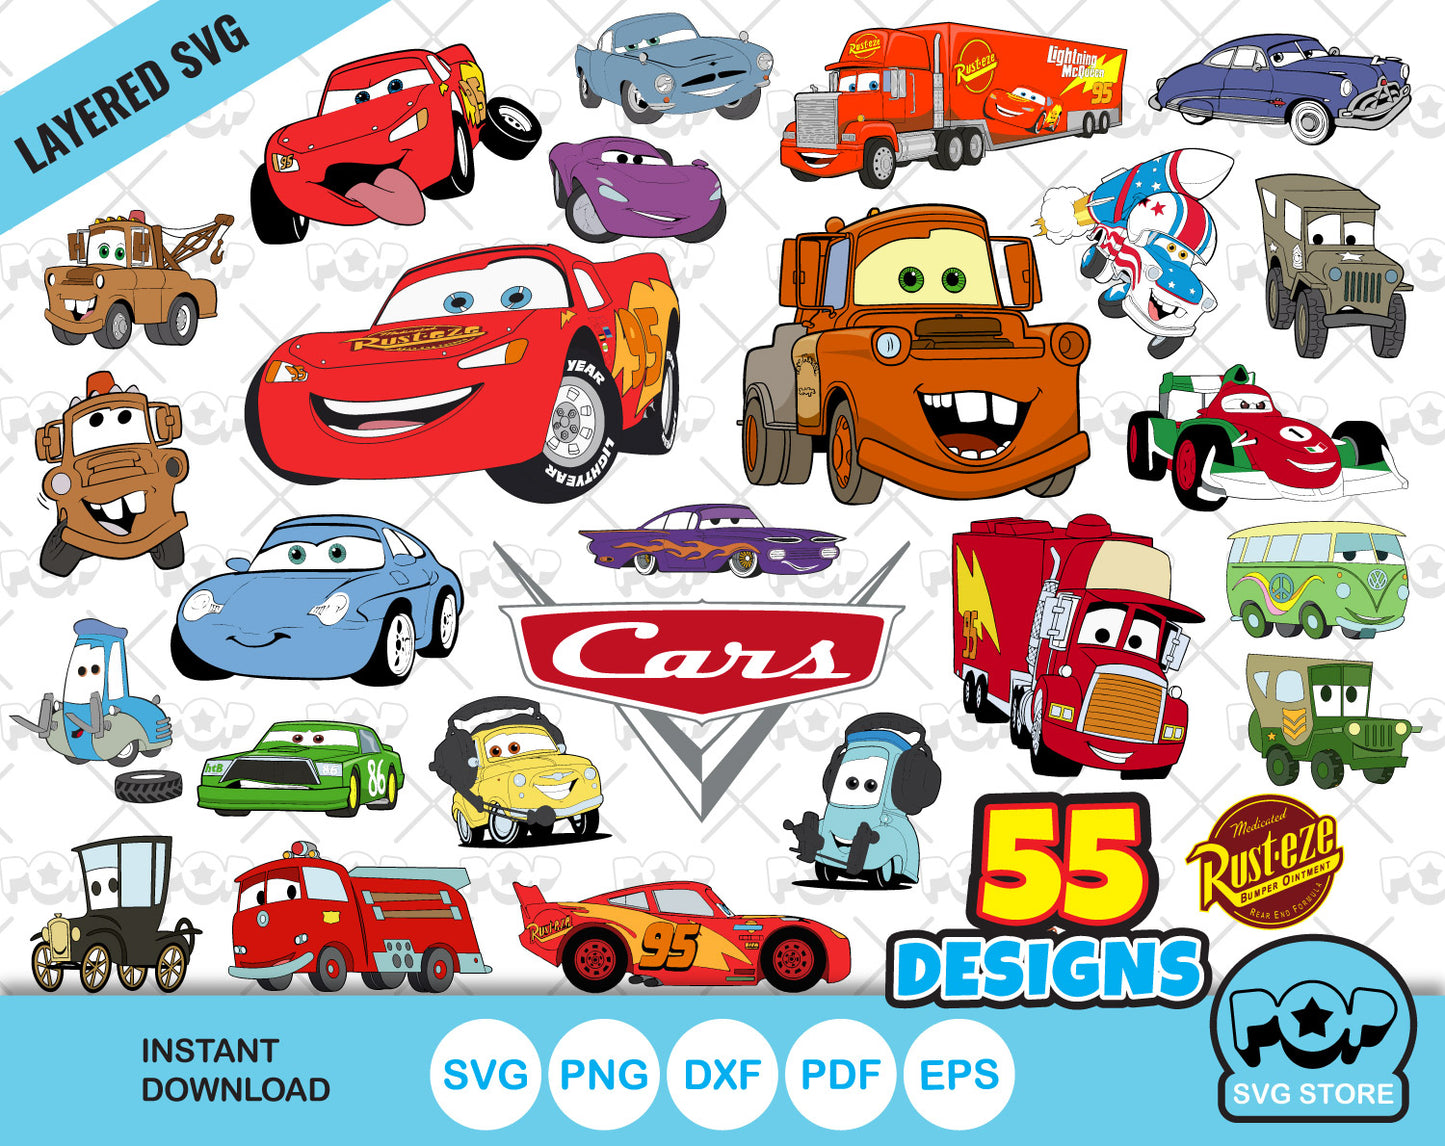 Cars clipart bundle, Disney Cars SVG cut files for Cricut / Silhouette, PNG DXF, instant download